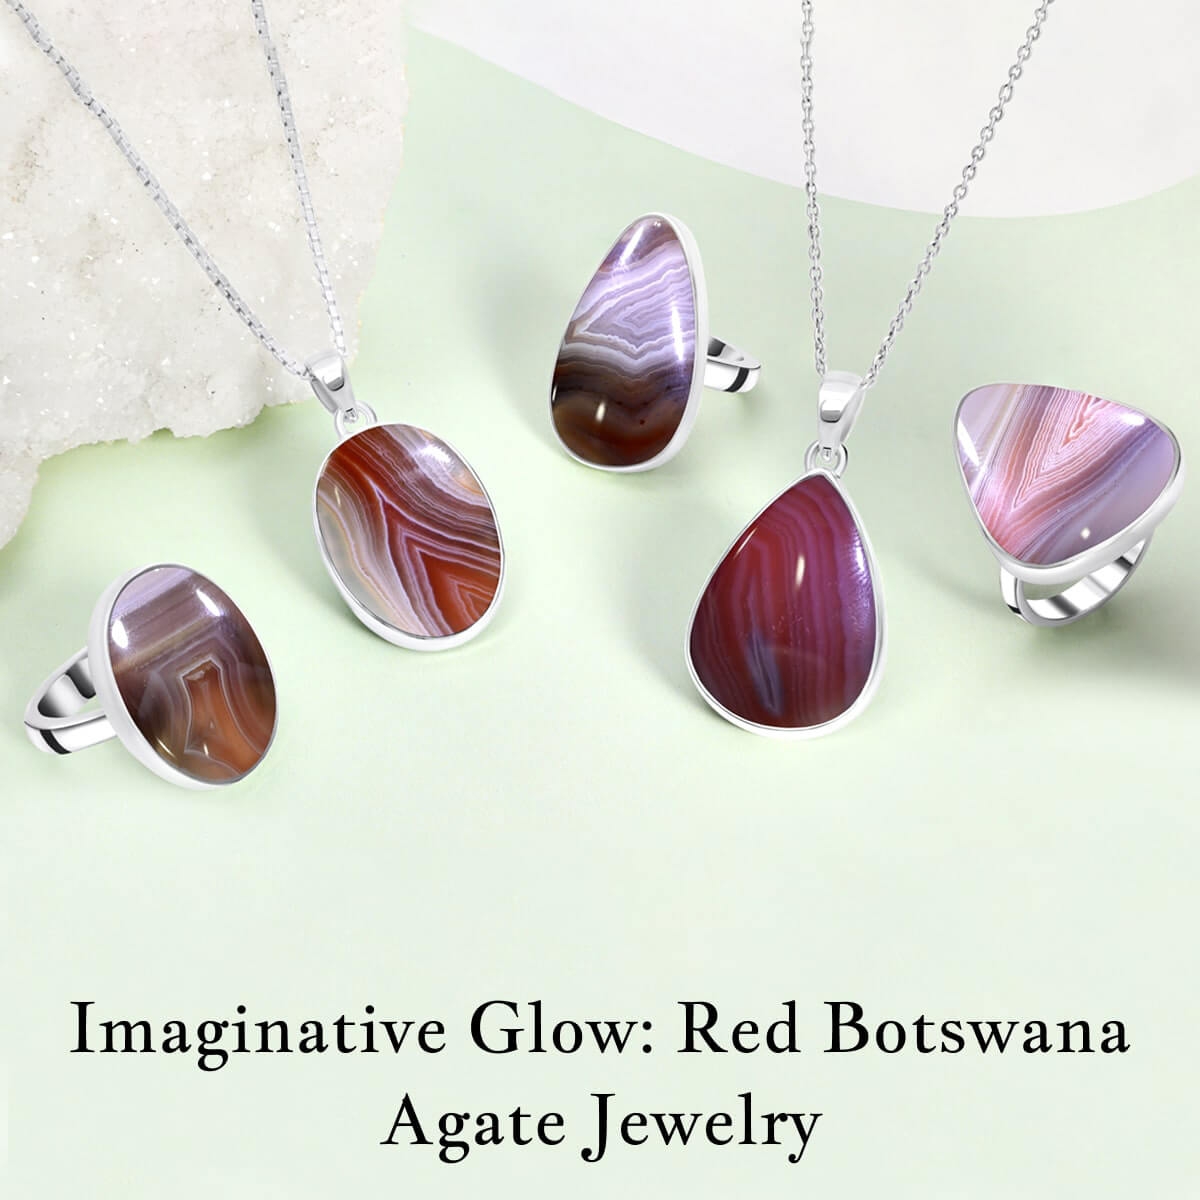 Red Botswana Agate Gemstone Jewelry